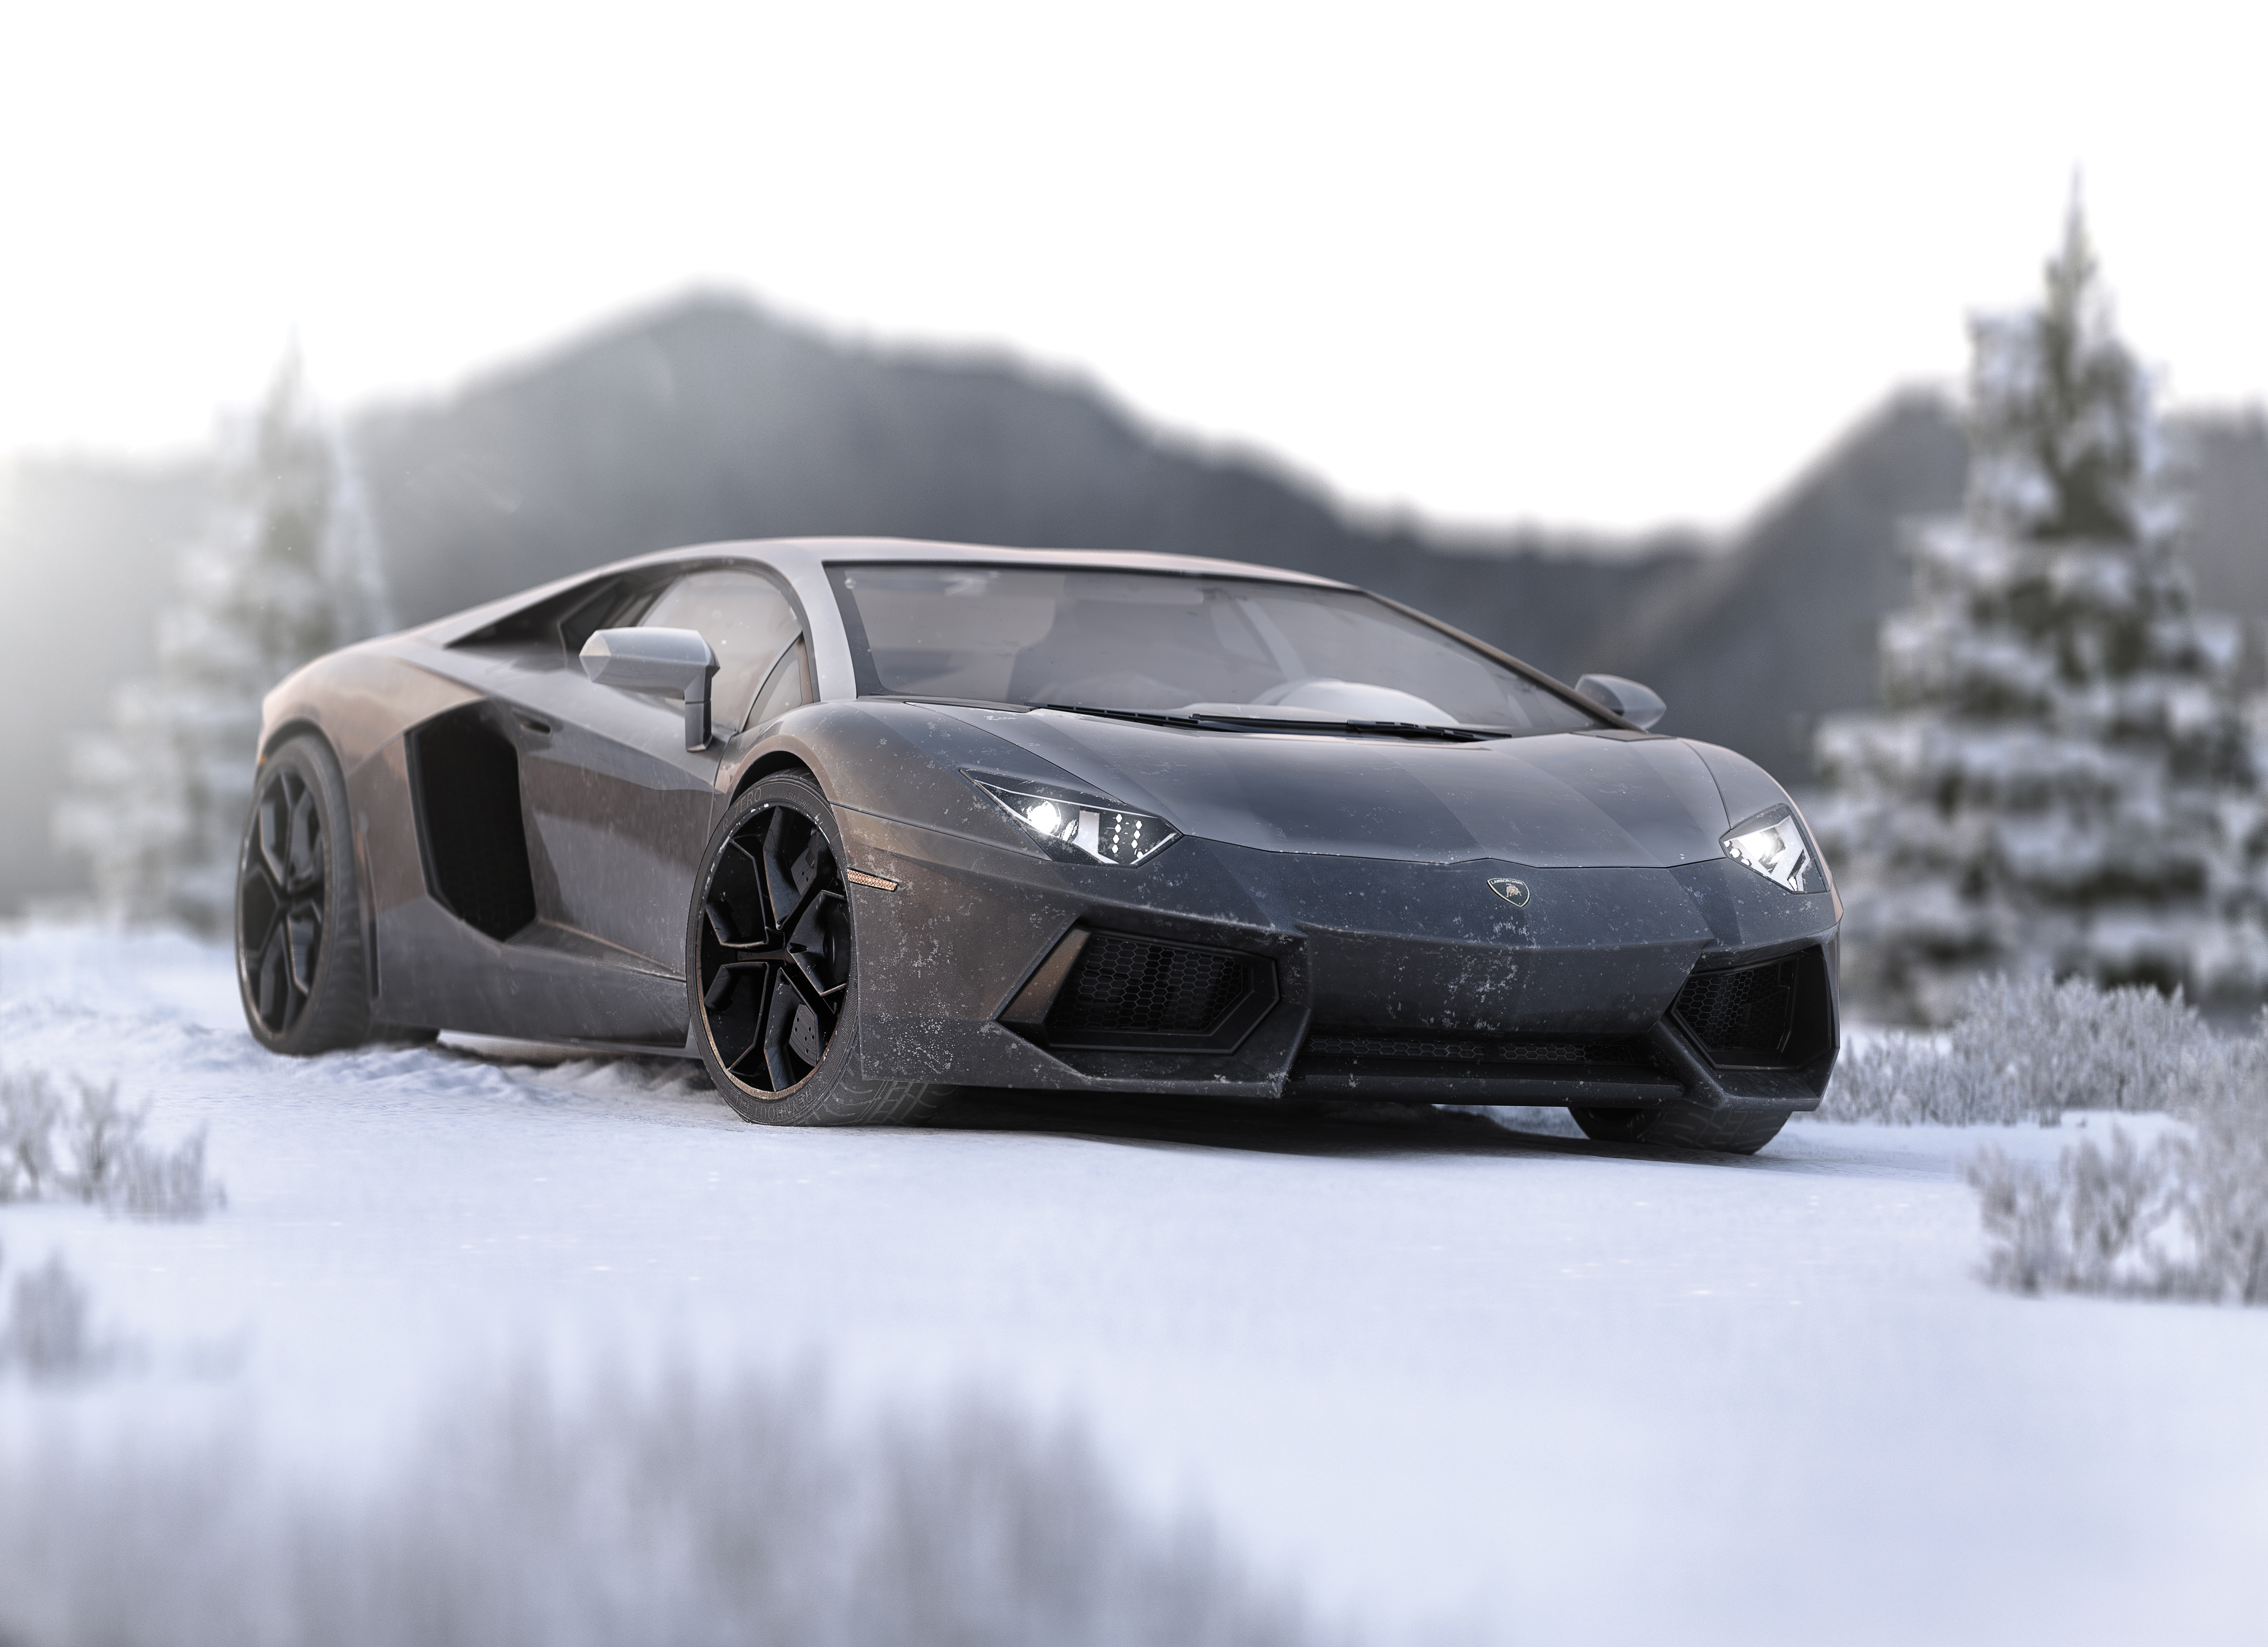 Create Astonishing Car Renders | 3D Artist - Animation, Models ...